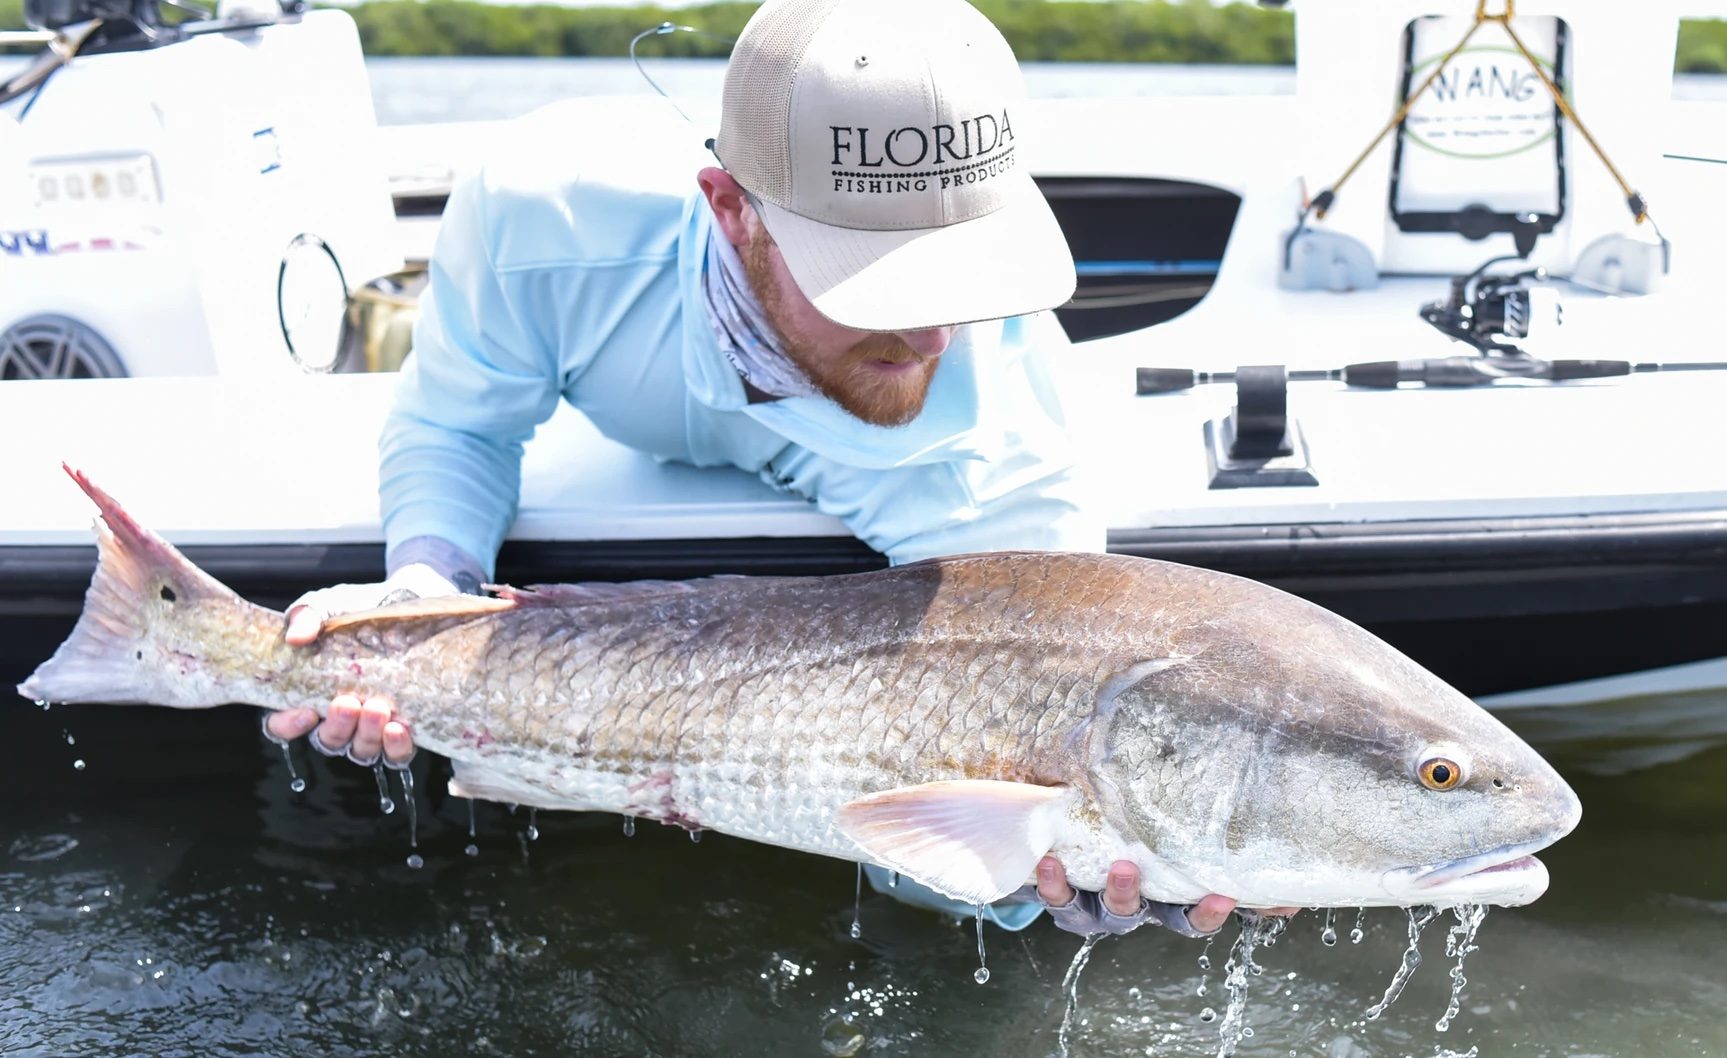 Florida Fishing Products